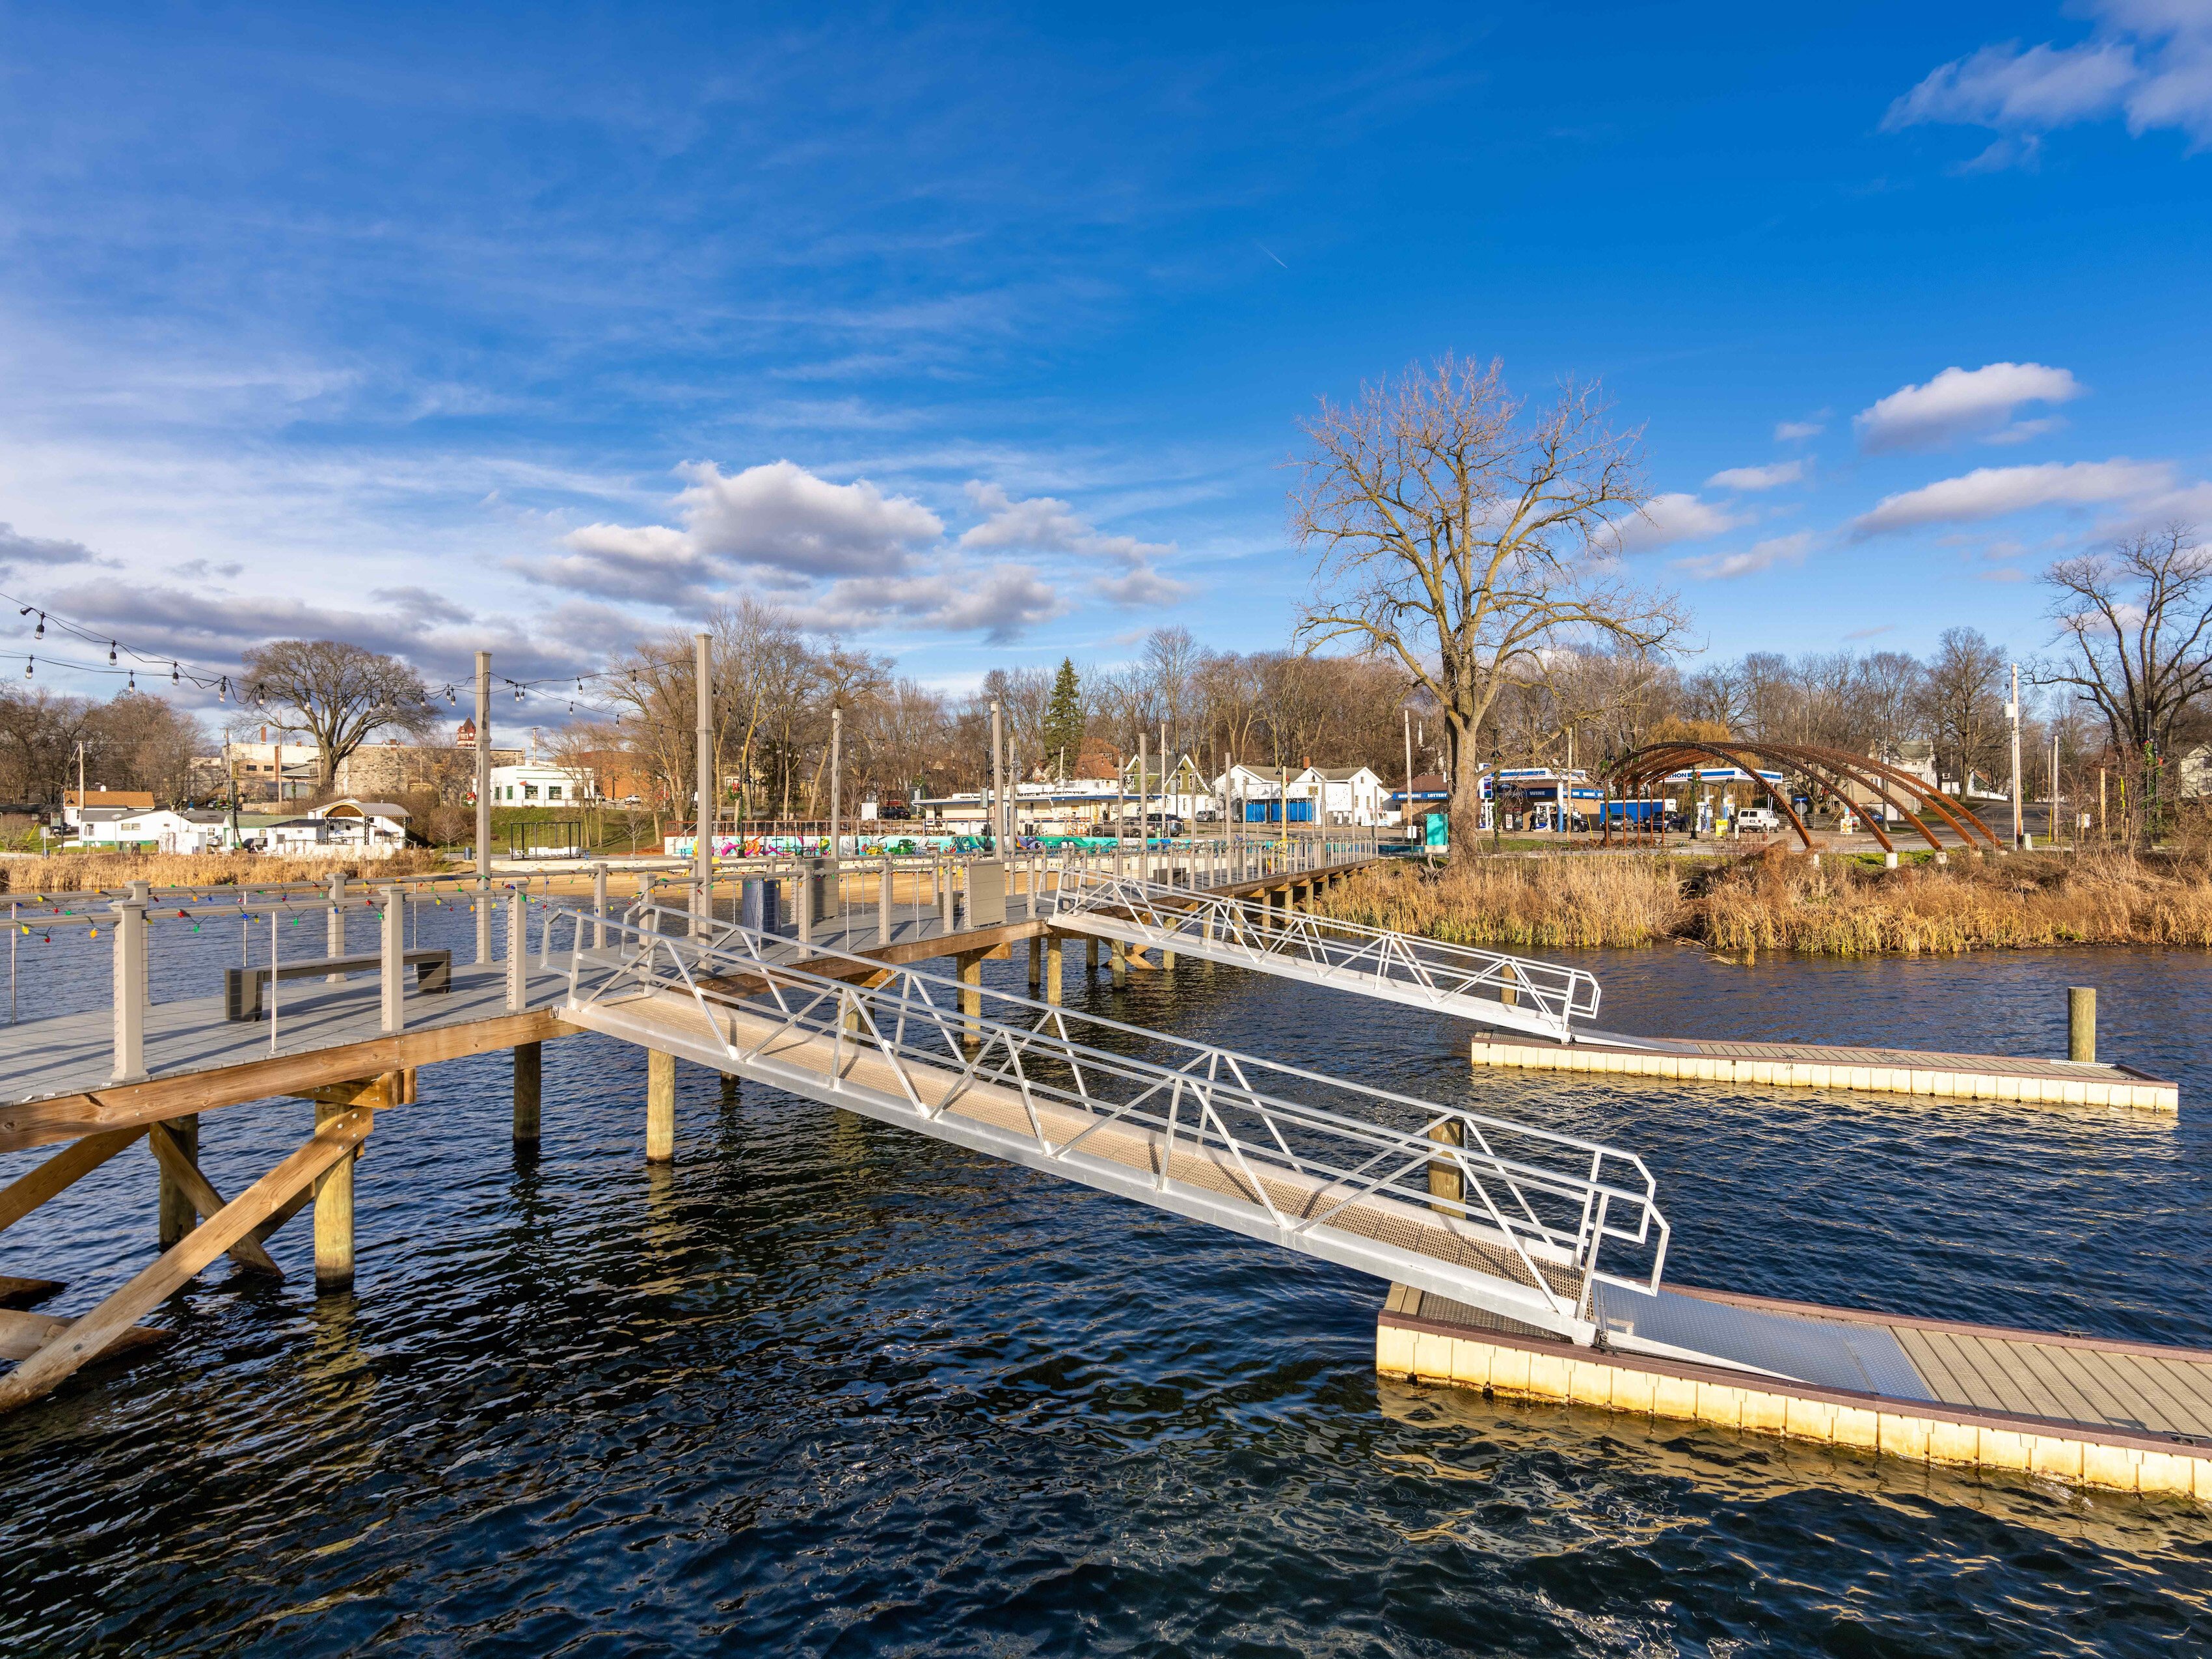 Docks on Stone Lake, part of the shoreline improvements in Cassopolis.